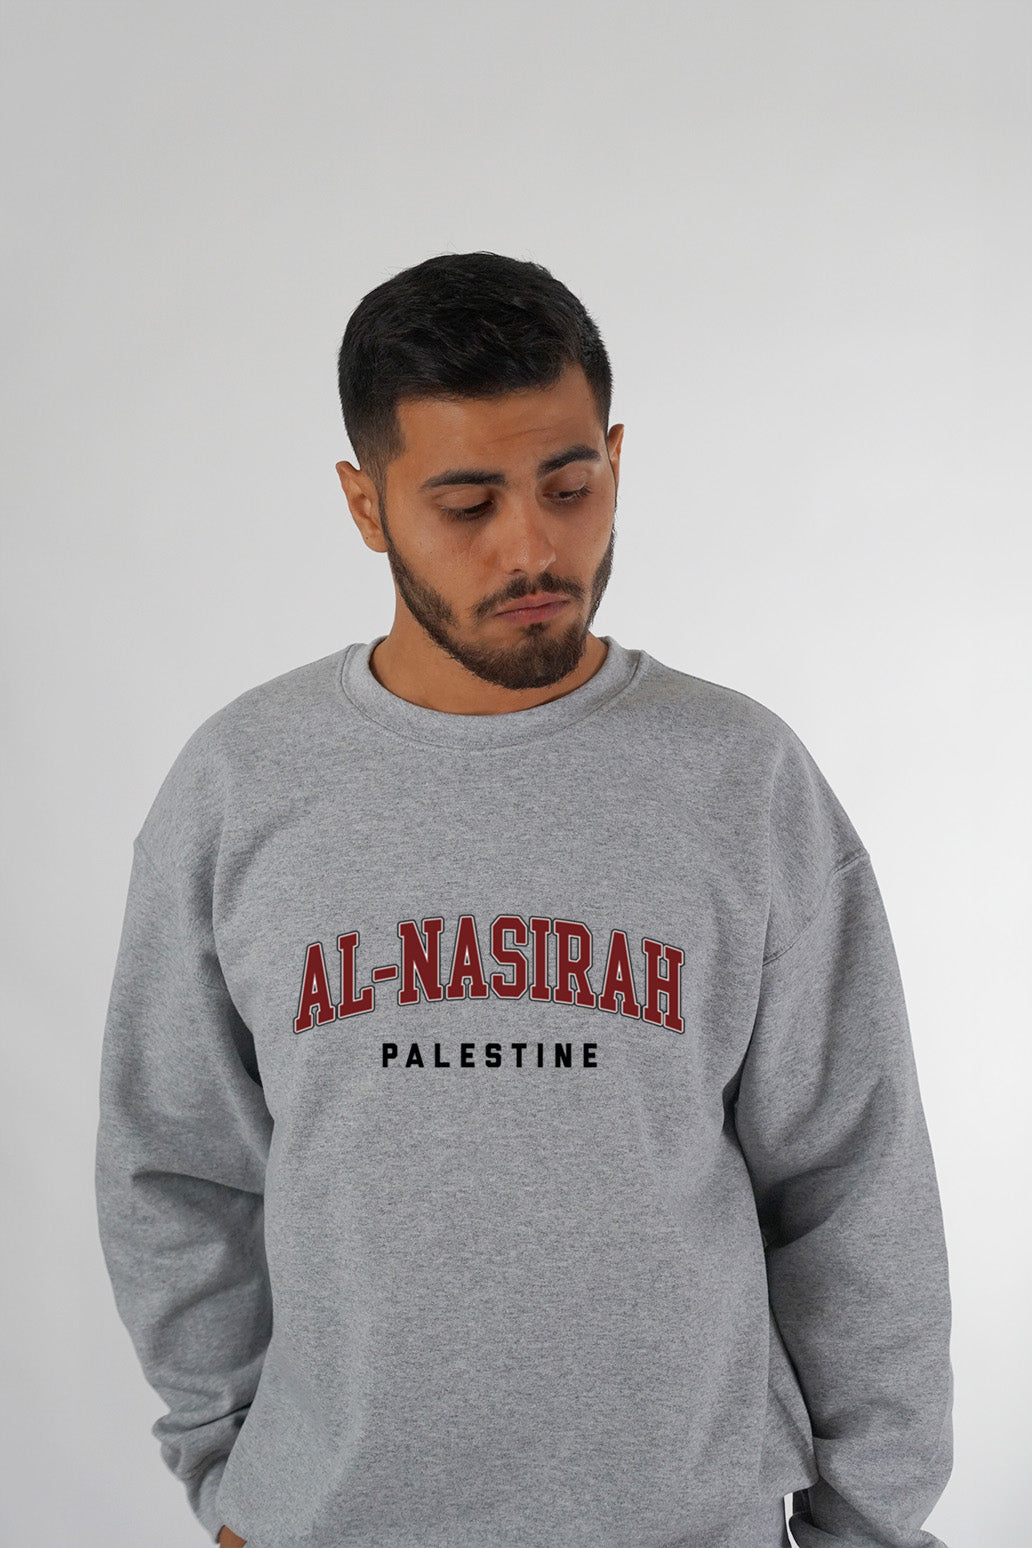 Al-Nasirah, Palestine - Sweatshirt